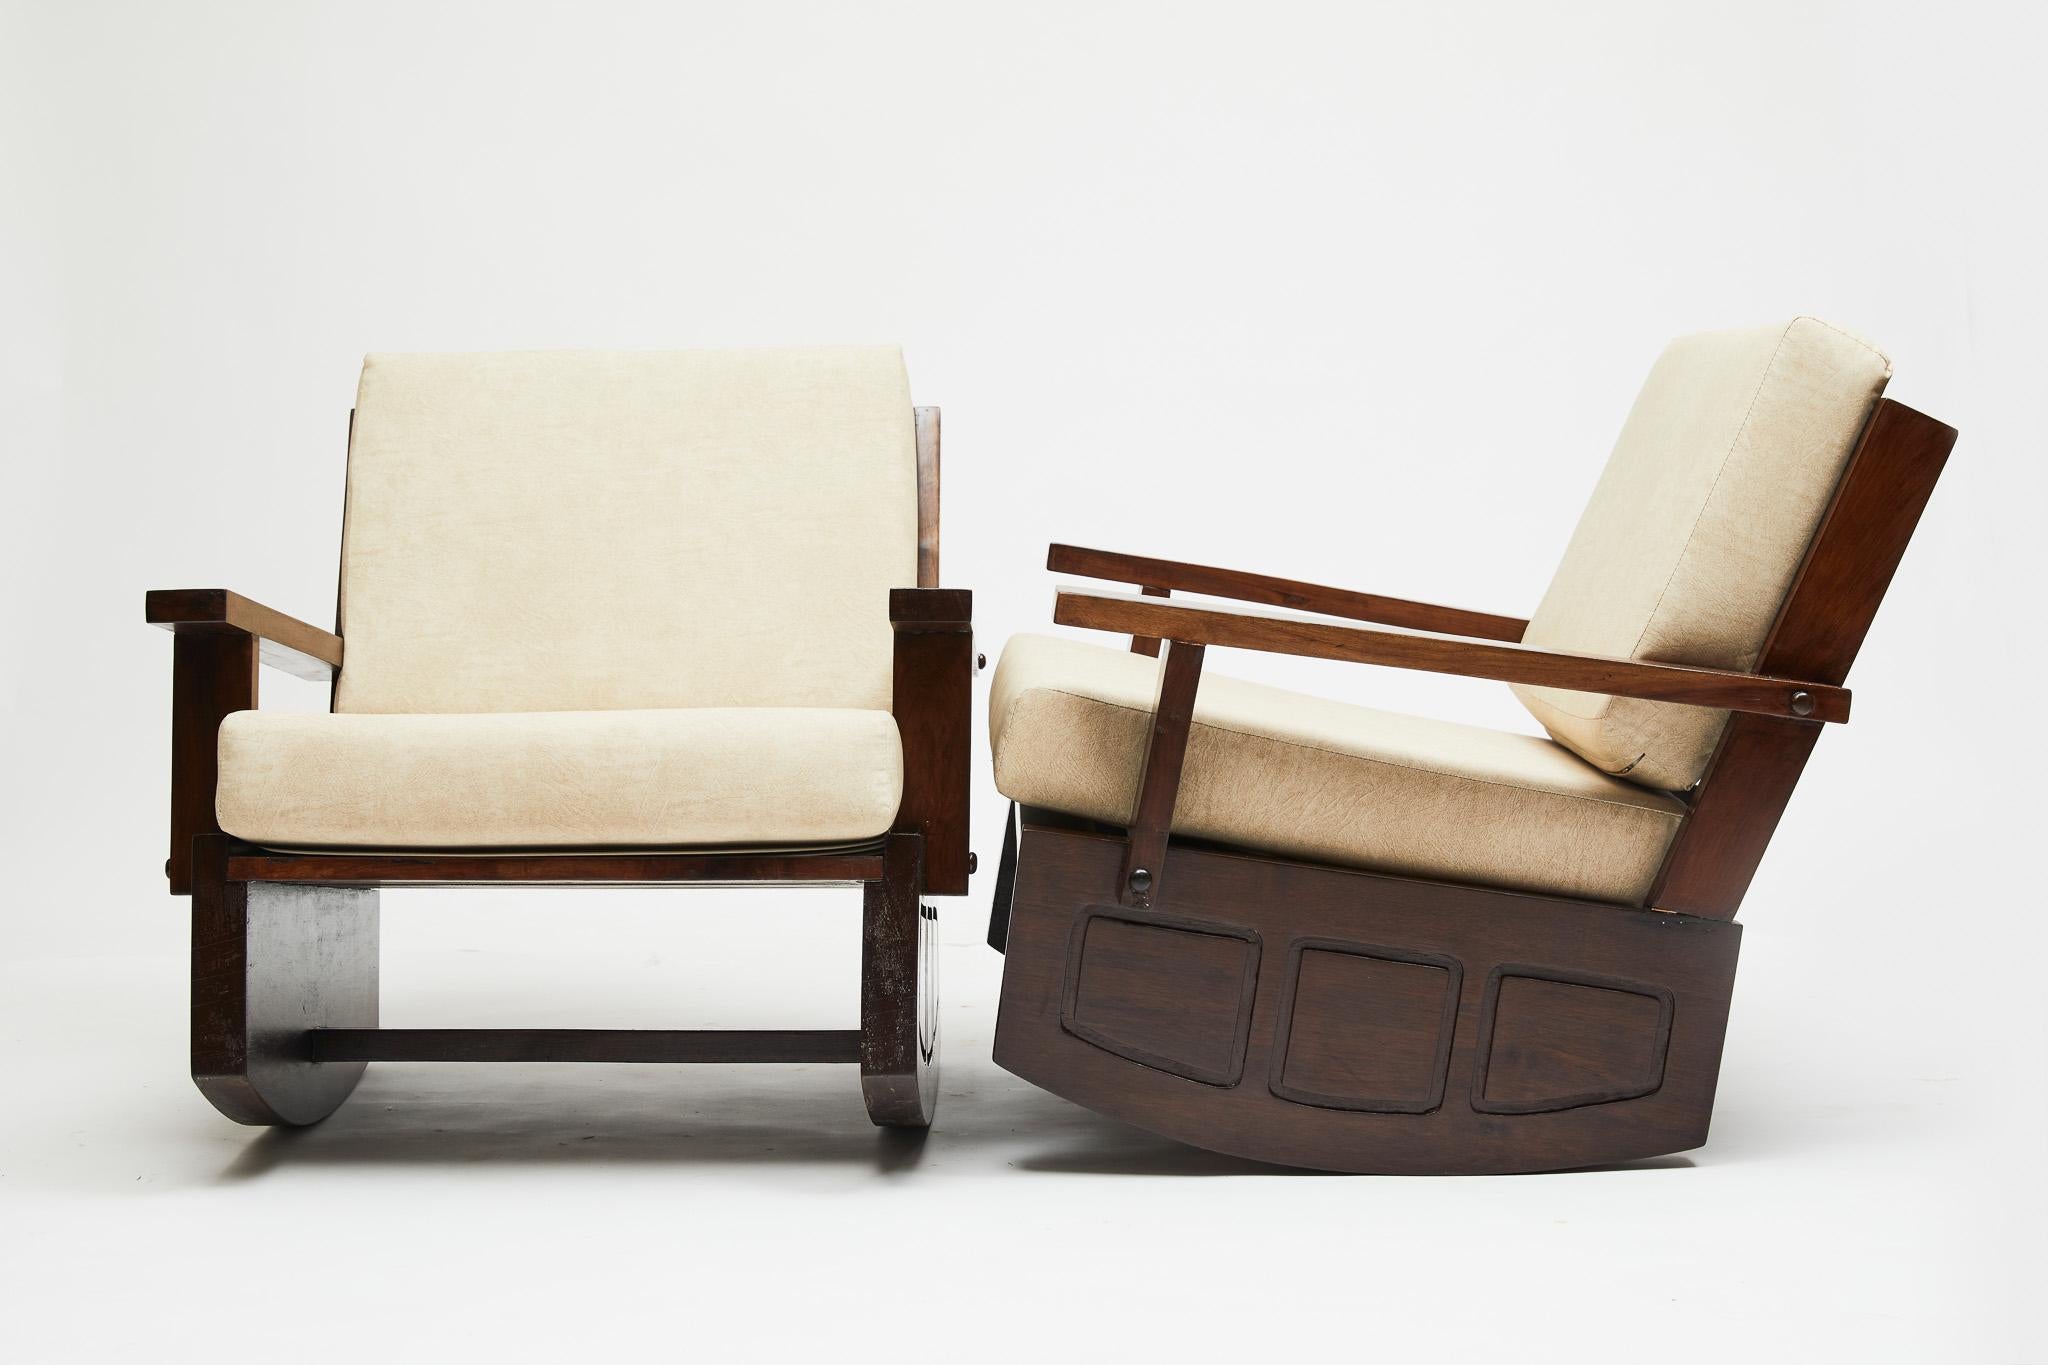 Hand-Carved Midcentury Modern Rocking Chairs in Hardwood & Cream Aqua Block cushions, Brazil